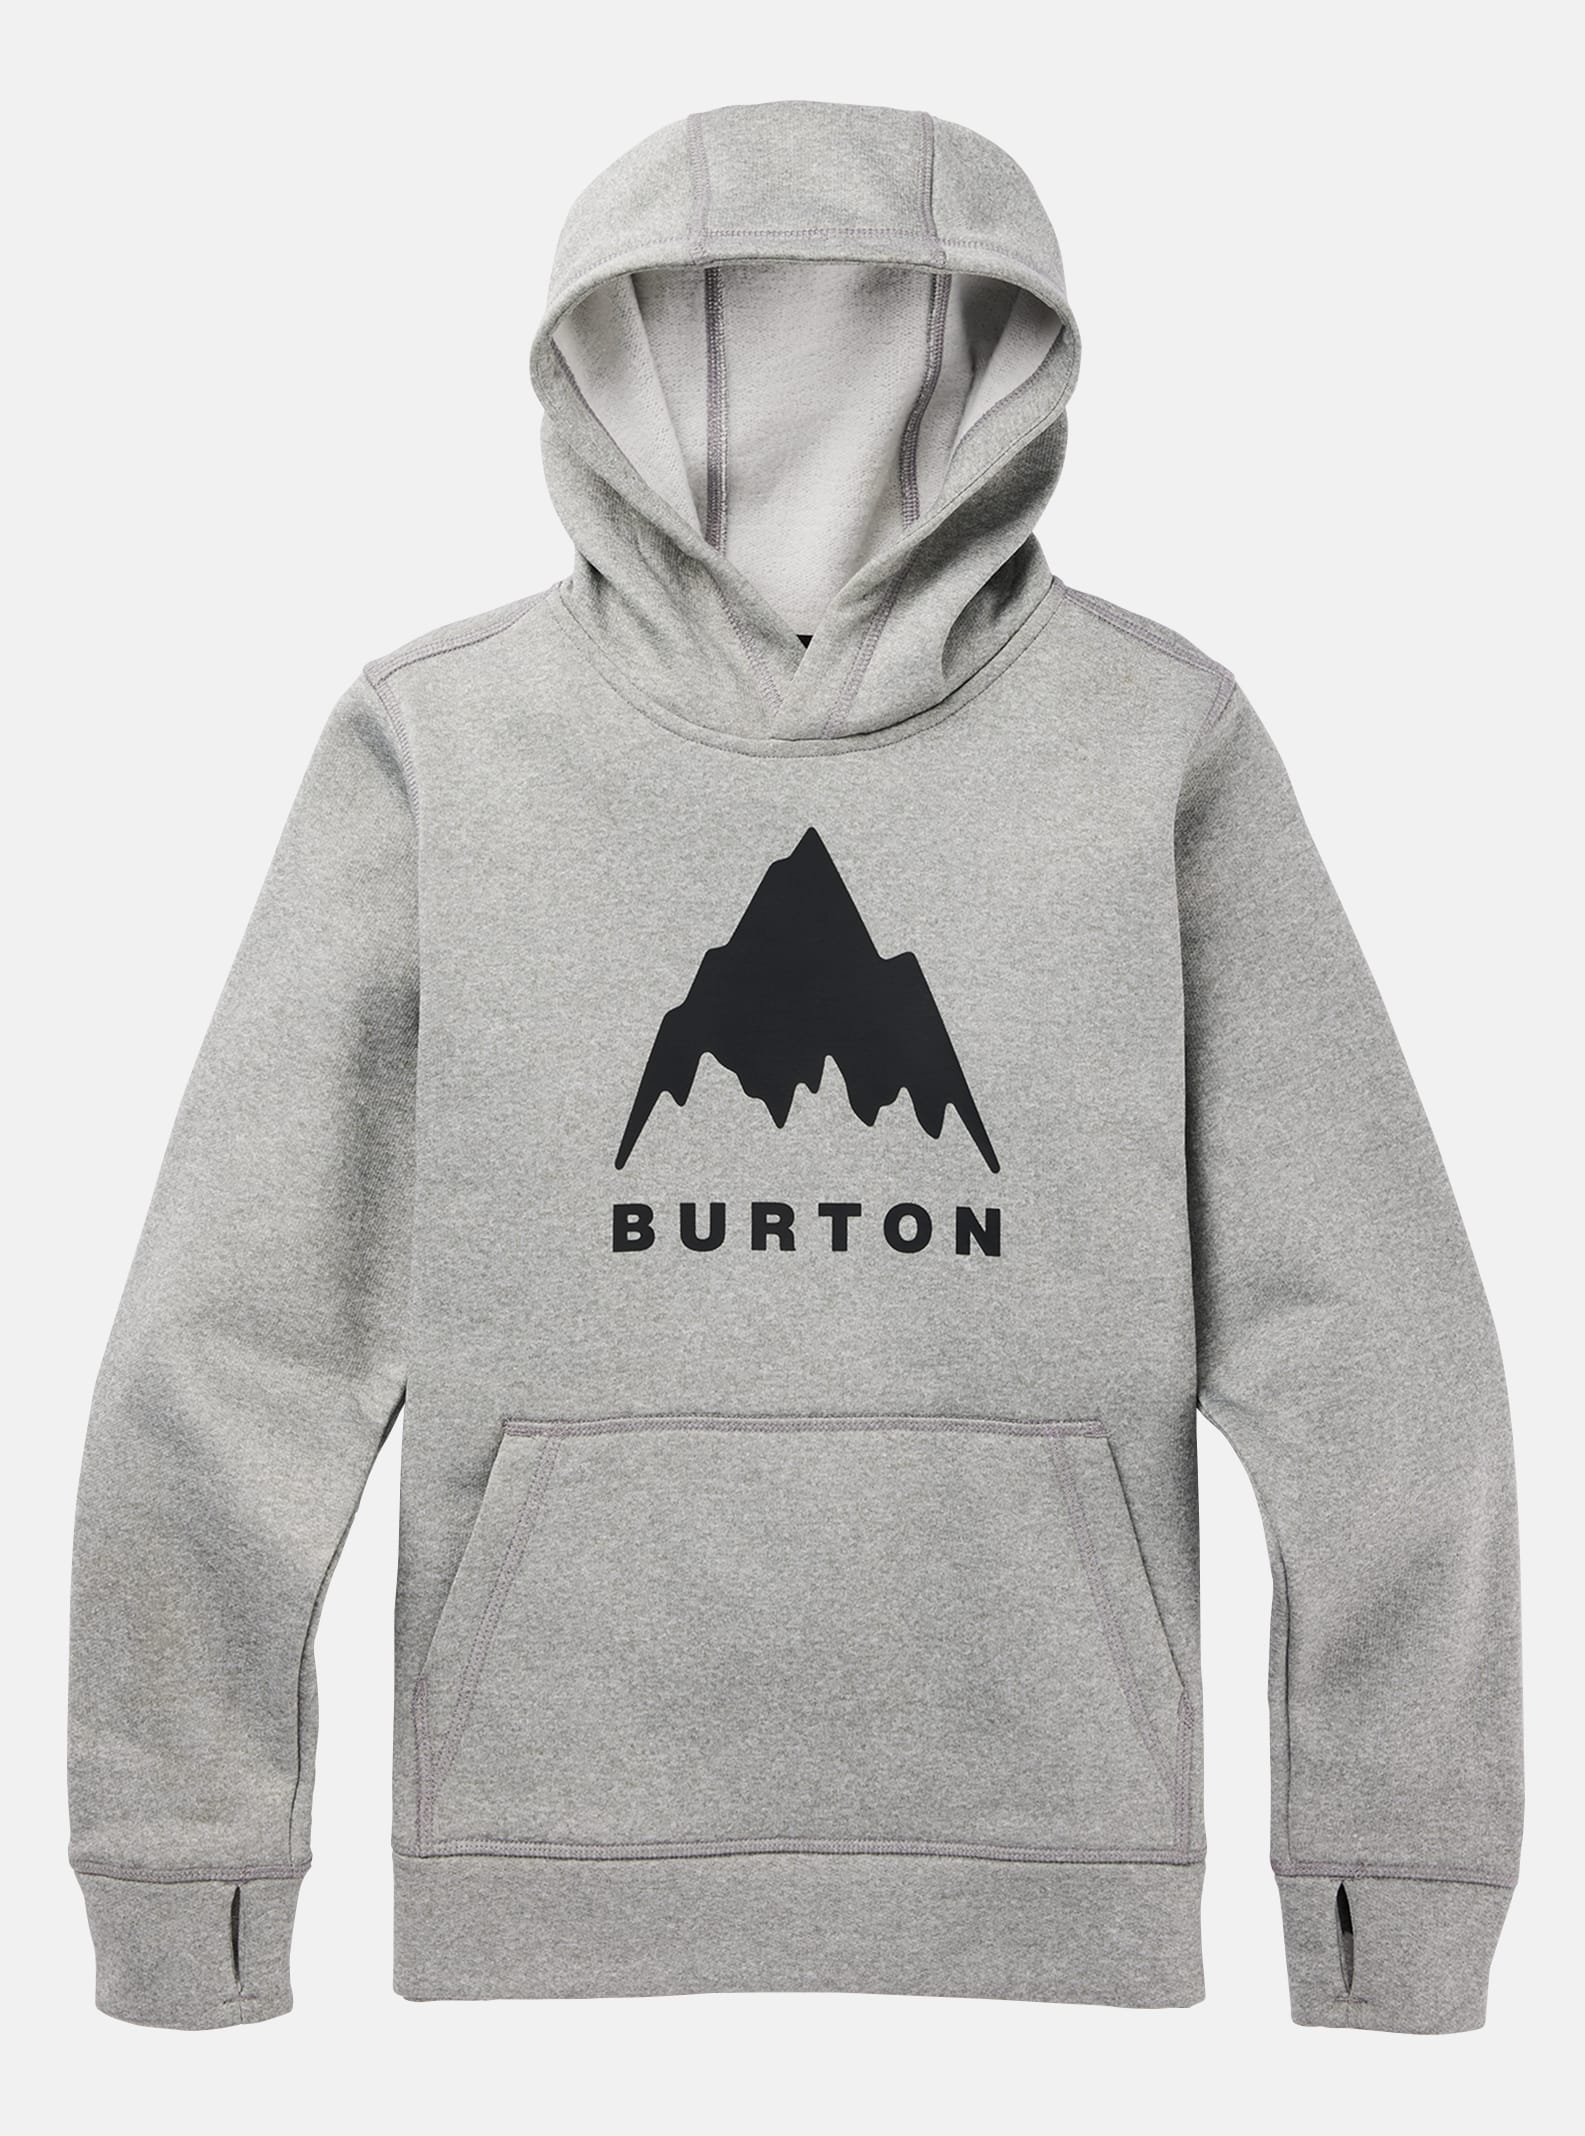 Kids' Hoodies & Sweatshirts | Burton Snowboards US